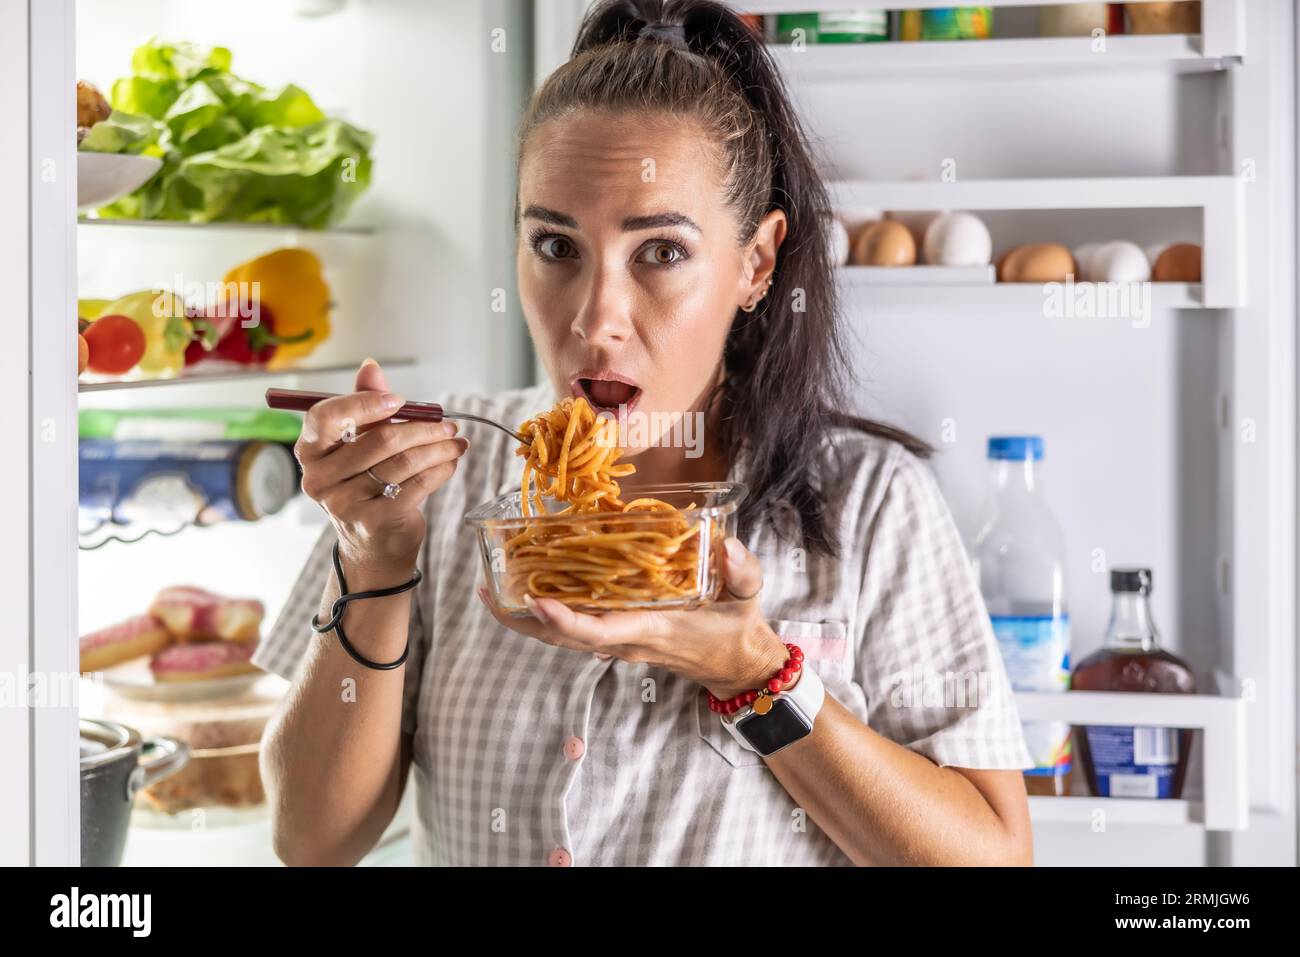 Verängstigte hungrige Frau im Schlafanzug isst nachts Spaghetti im Kühlschrank. Stockfoto